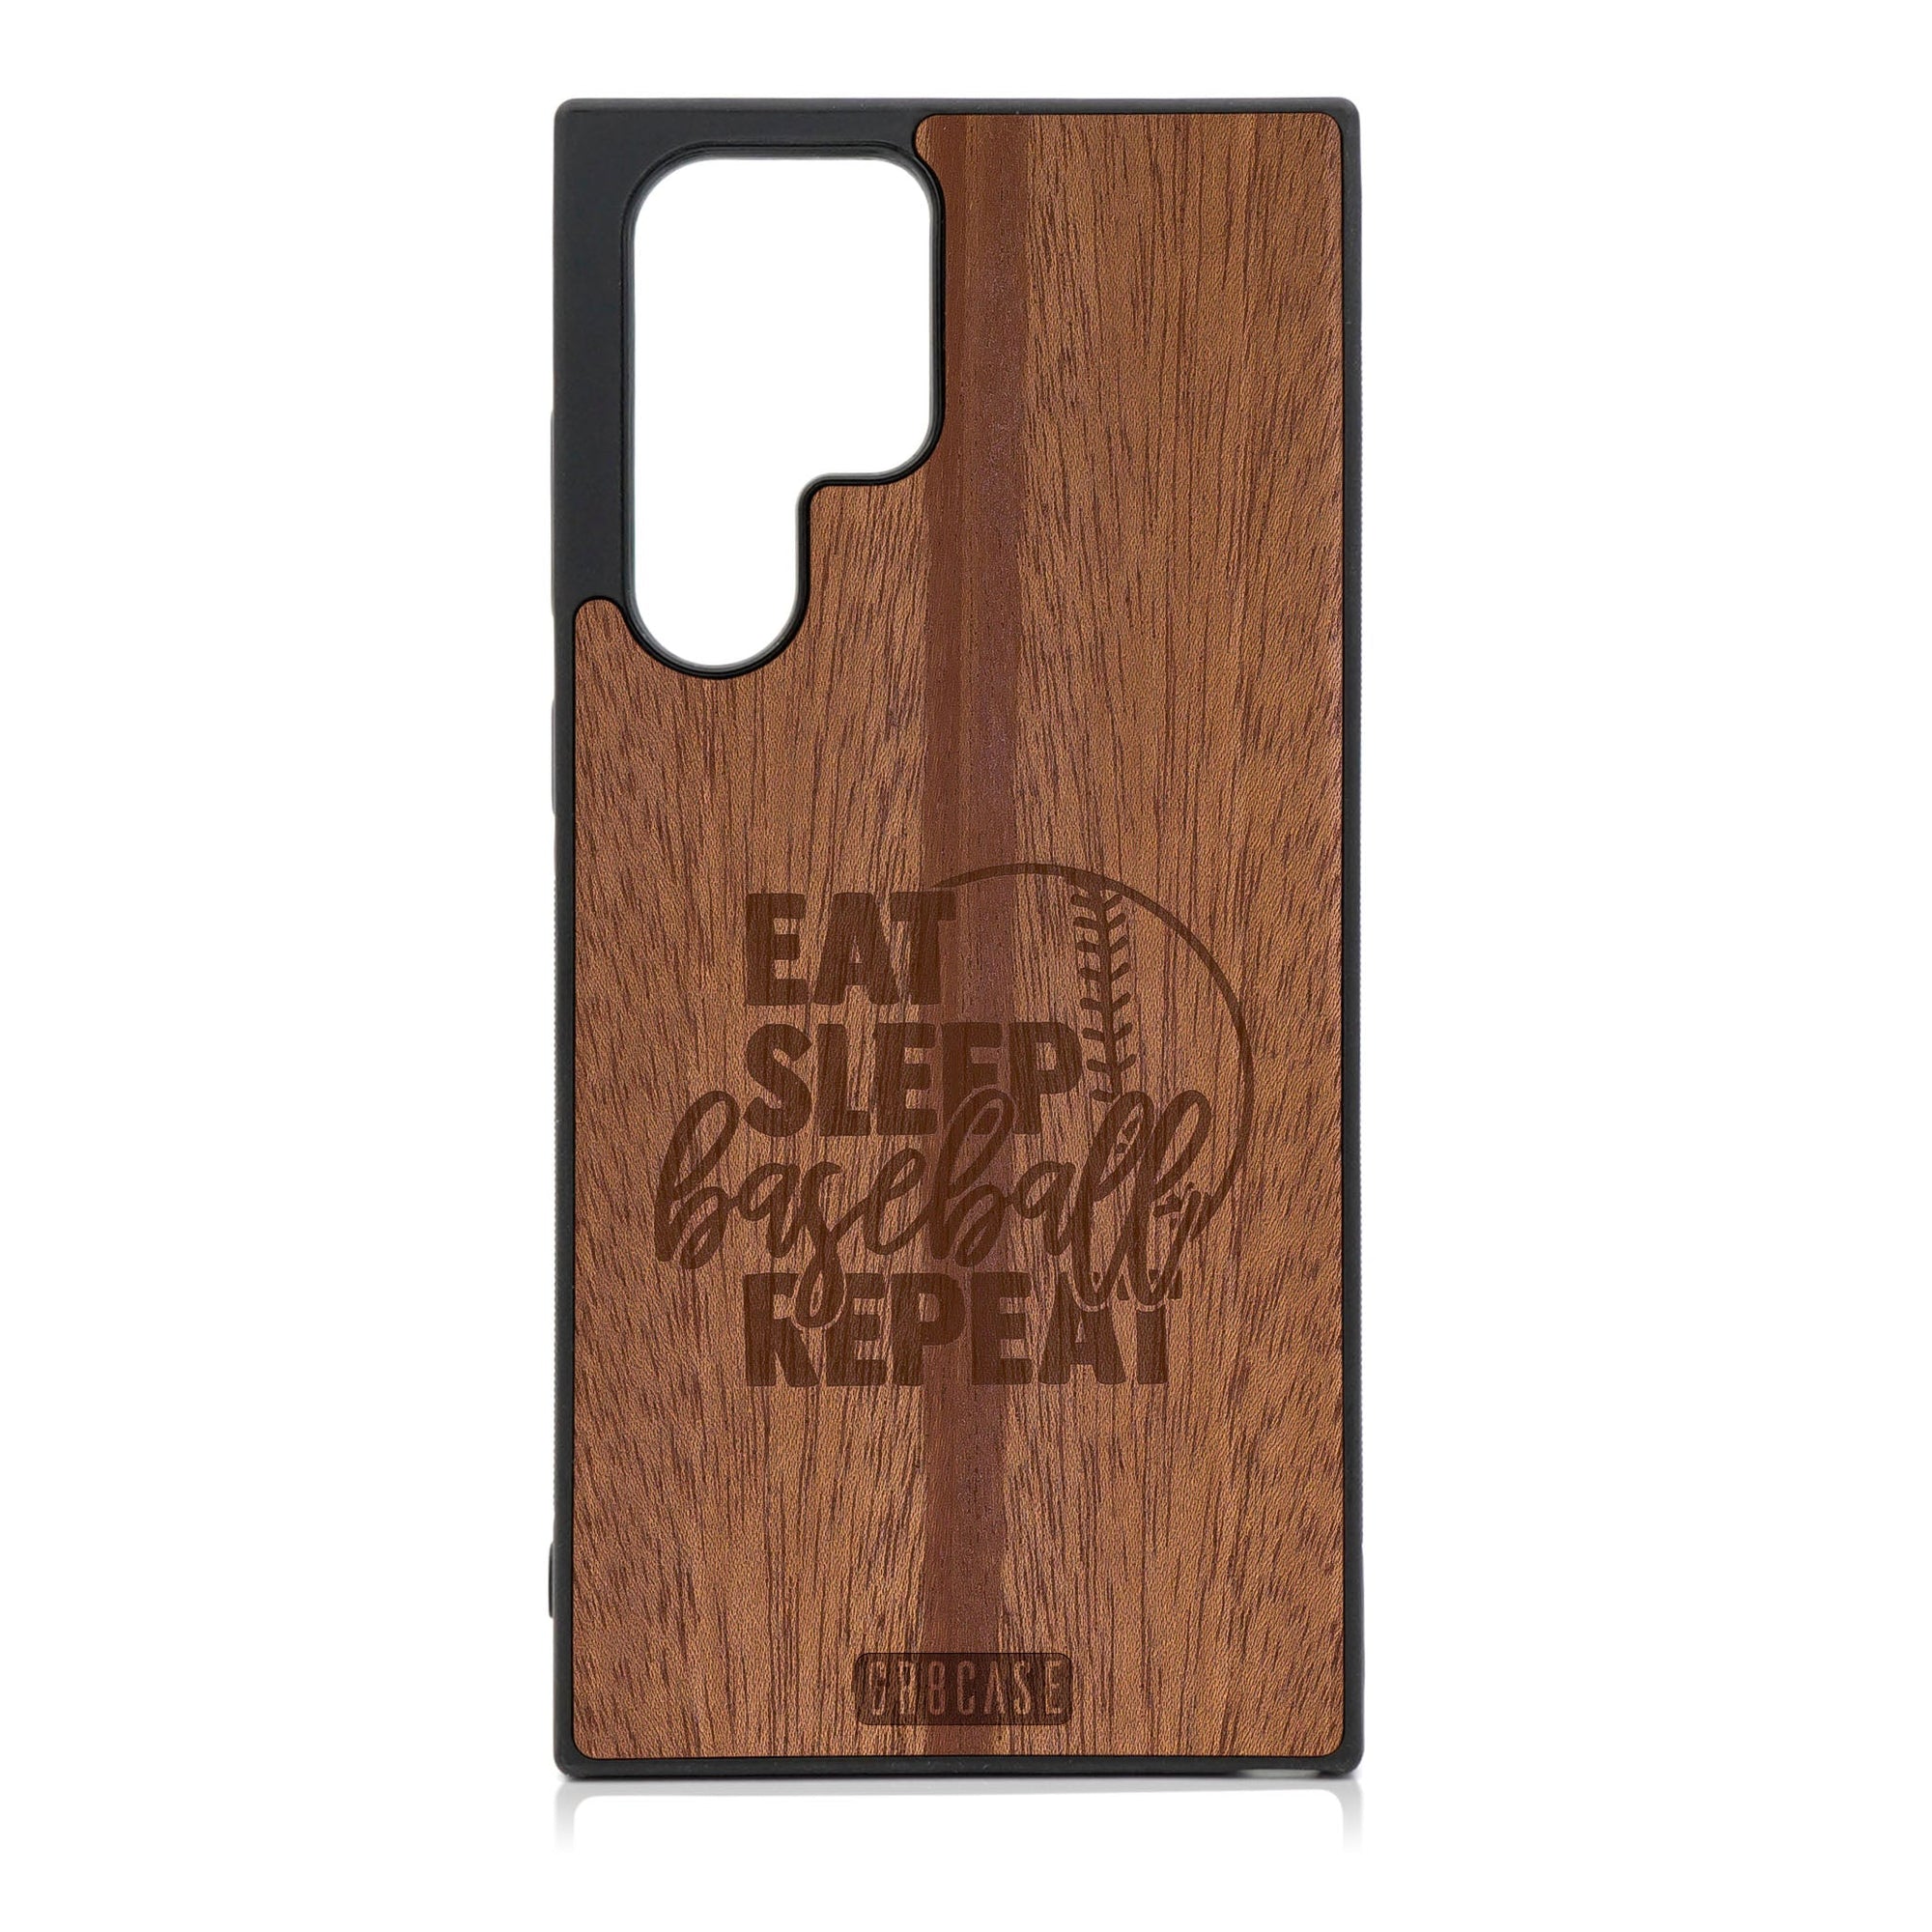 Eat Sleep Baseball Repeat Design Wood Phone Case For Galaxy S23 Ultra